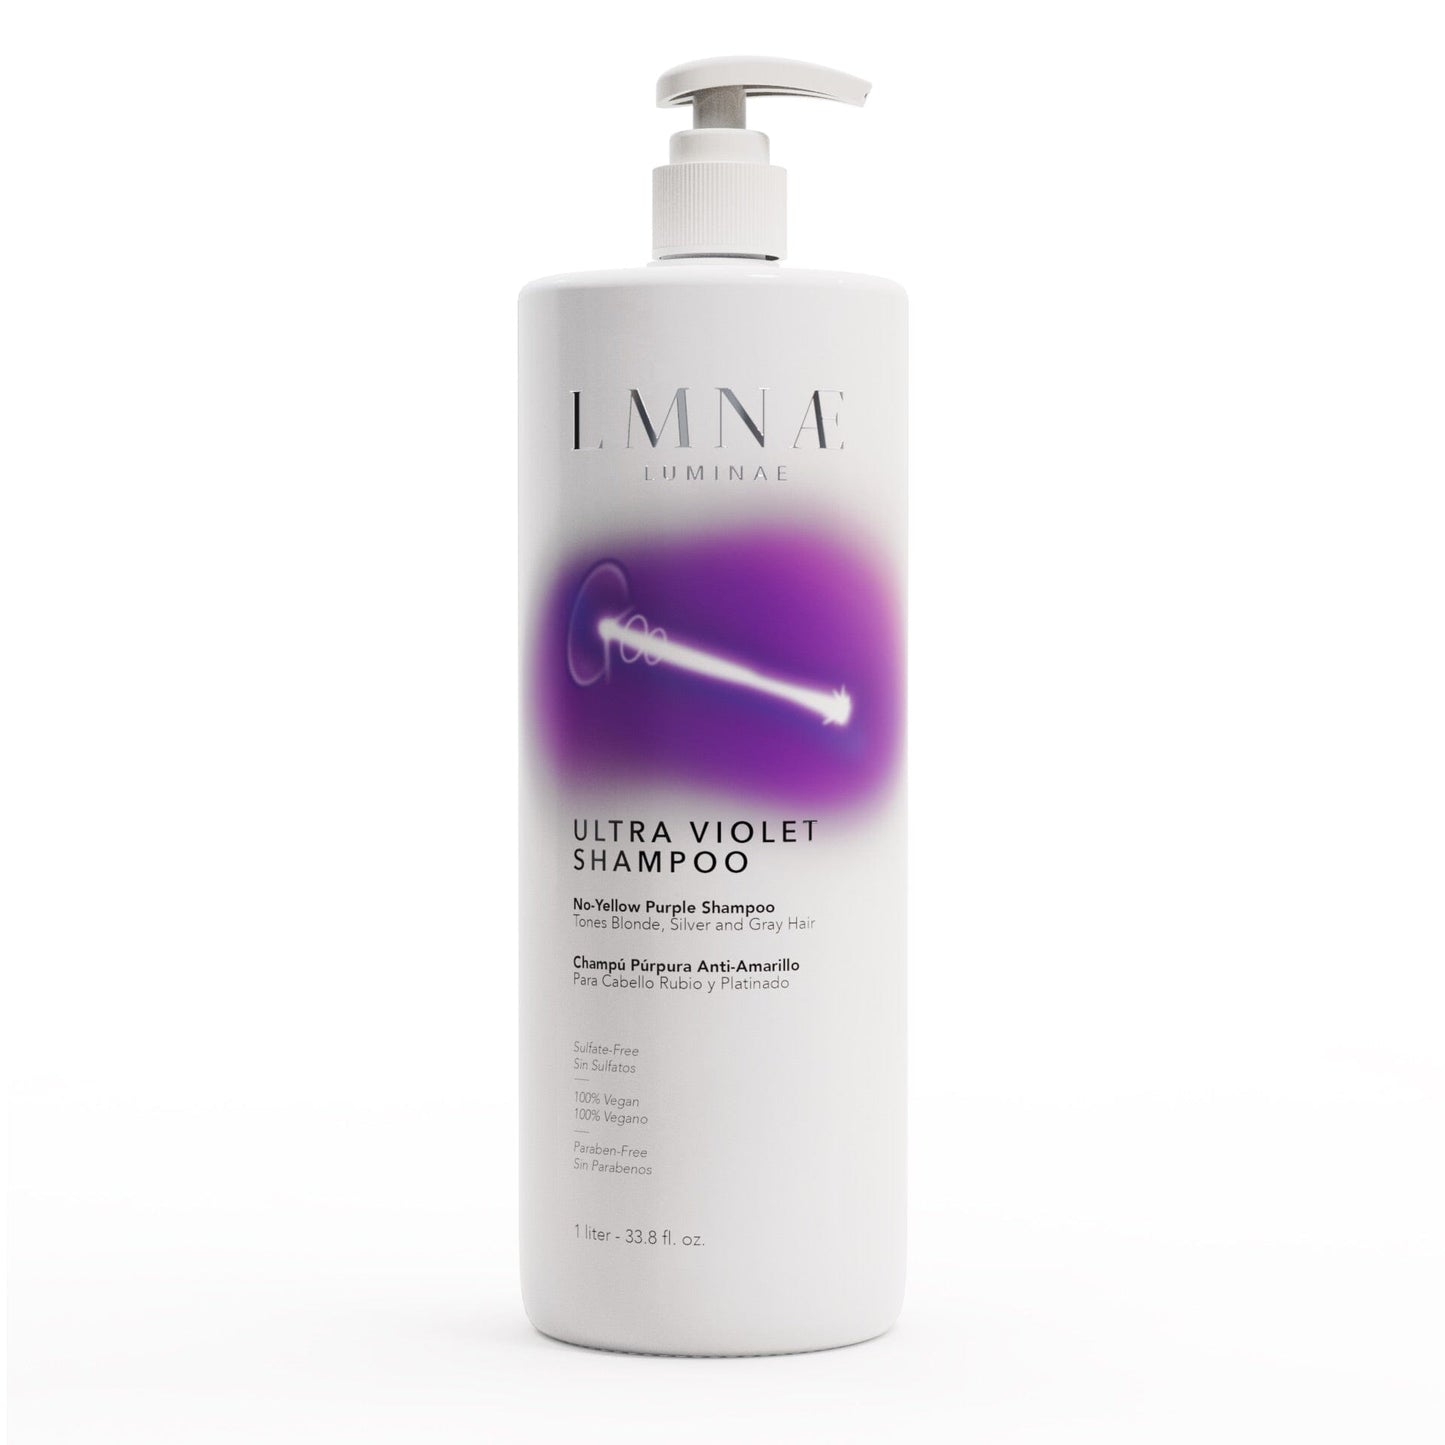 Ultra Violet Shampoo | LUMINAE SHAMPOO LUMINAE 33.8 fl. oz. - 1L 